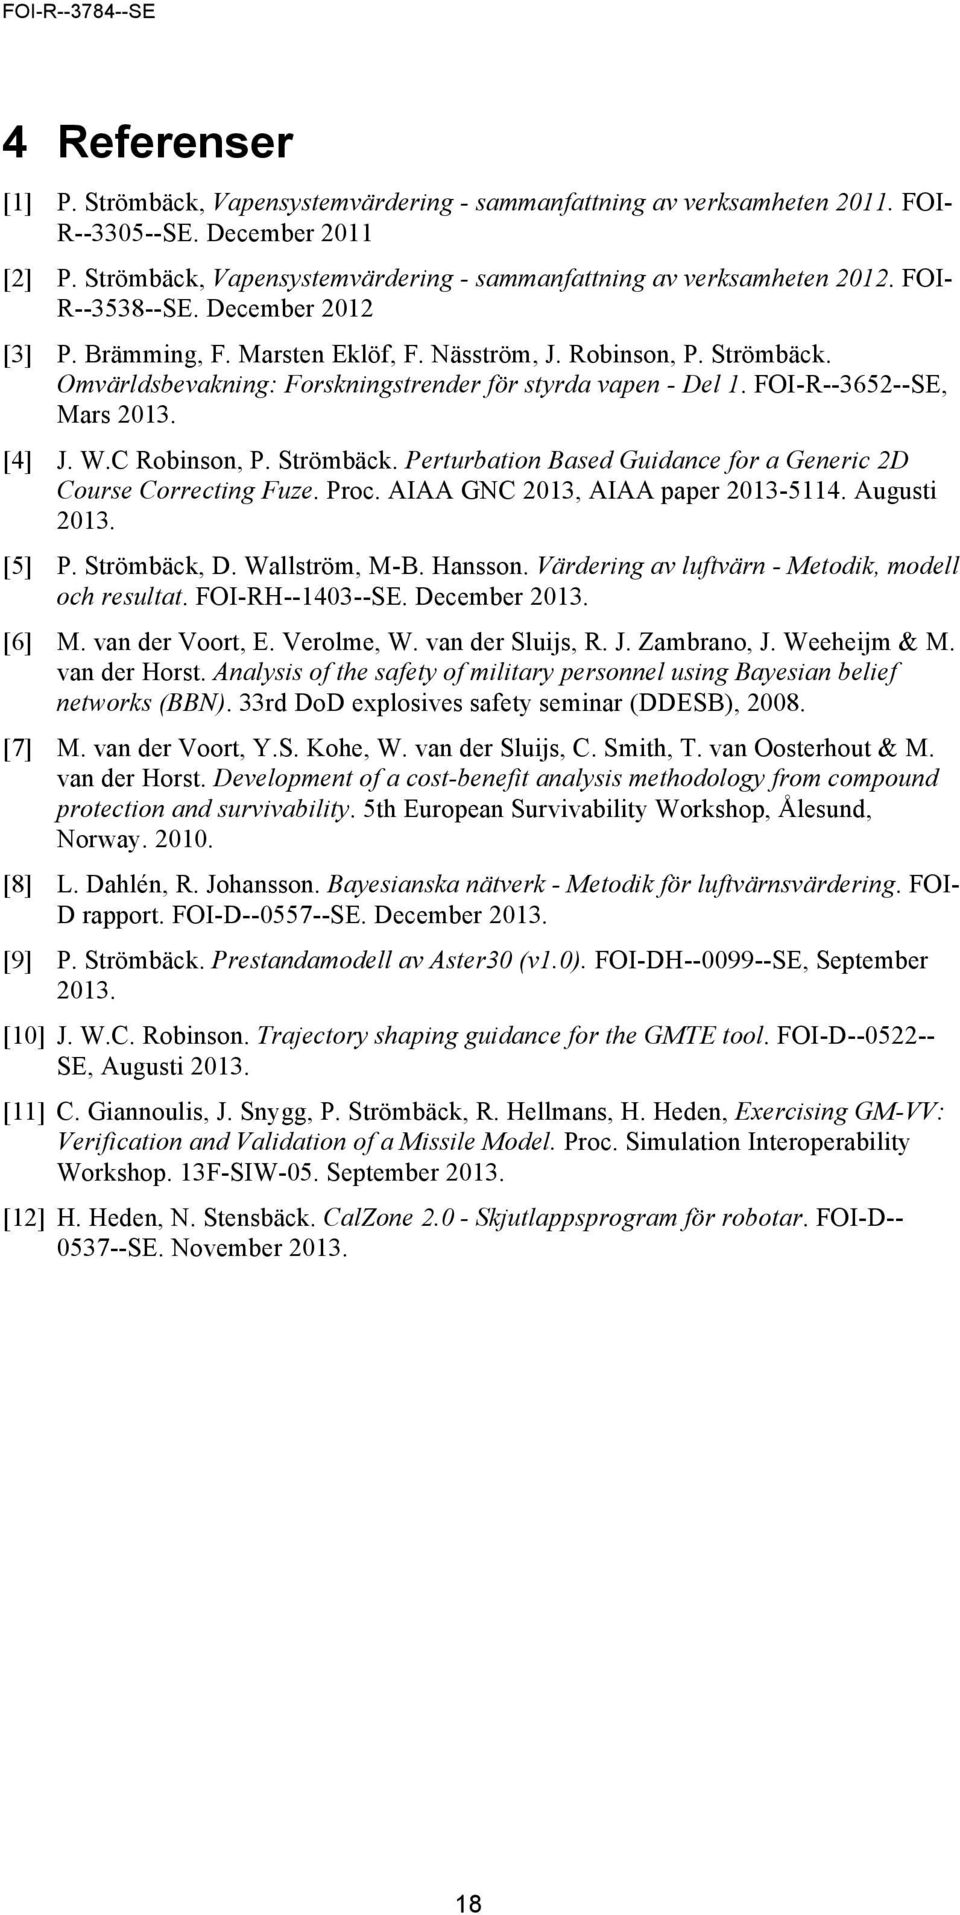 [4] J. W.C Robinson, P. Strömbäck. Perturbation Based Guidance for a Generic 2D Course Correcting Fuze. Proc. AIAA GNC 2013, AIAA paper 2013-5114. Augusti 2013. [5] P. Strömbäck, D. Wallström, M-B.